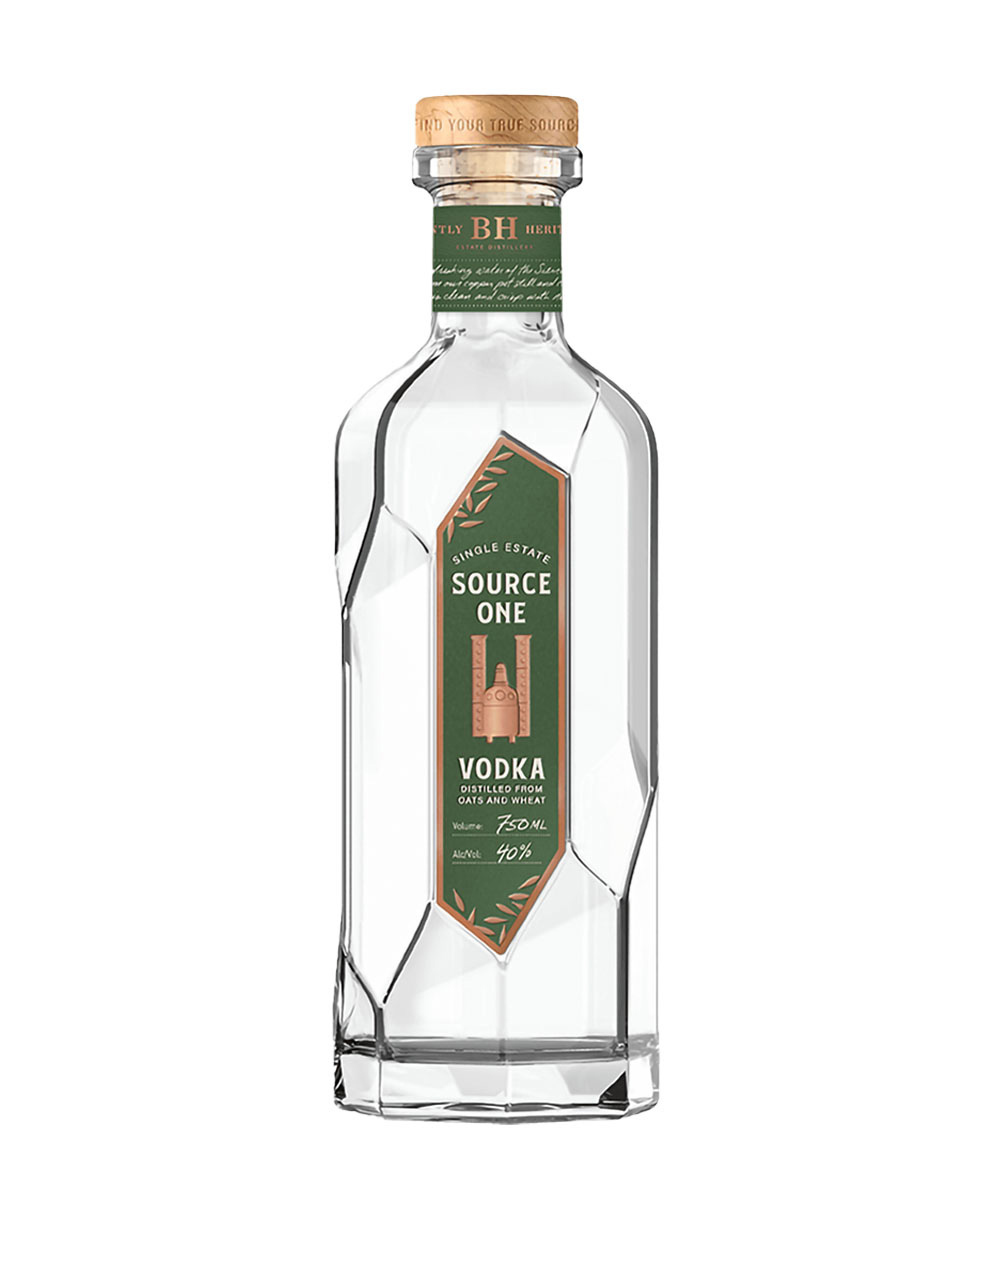 Ultimat Vodka